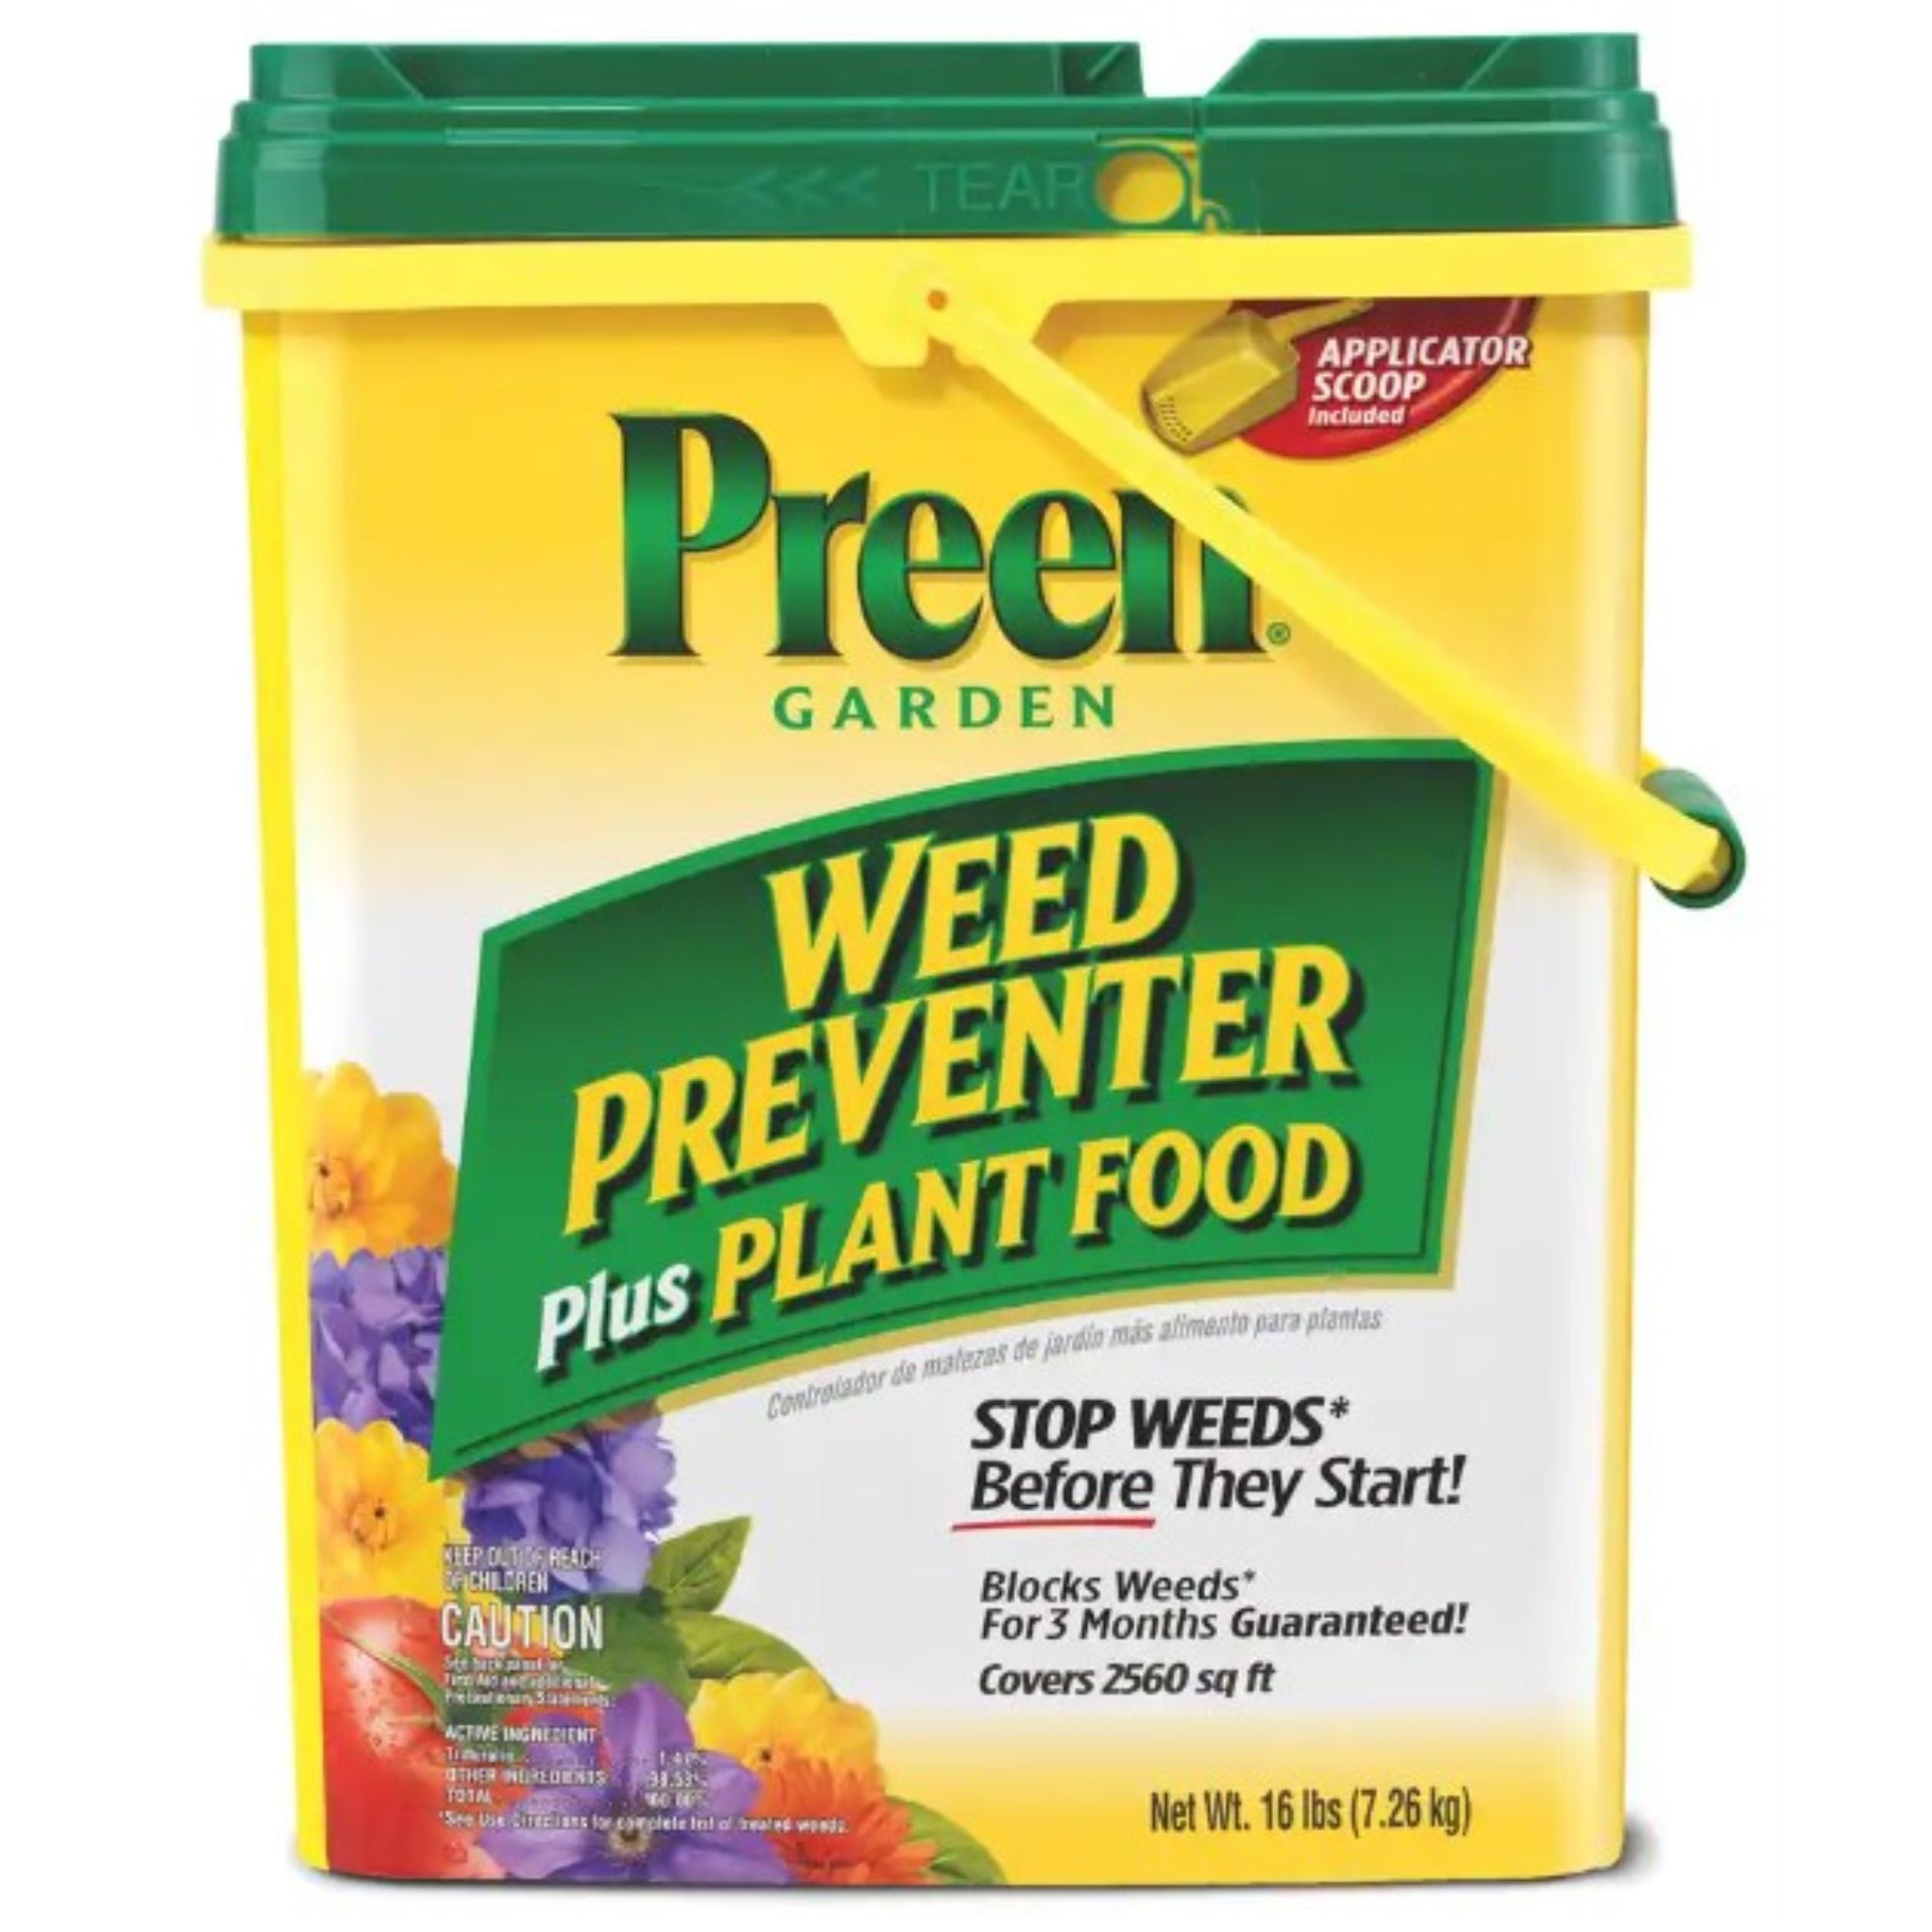 Preen Garden Weed Preventer Plus Plant Food, 16Lb